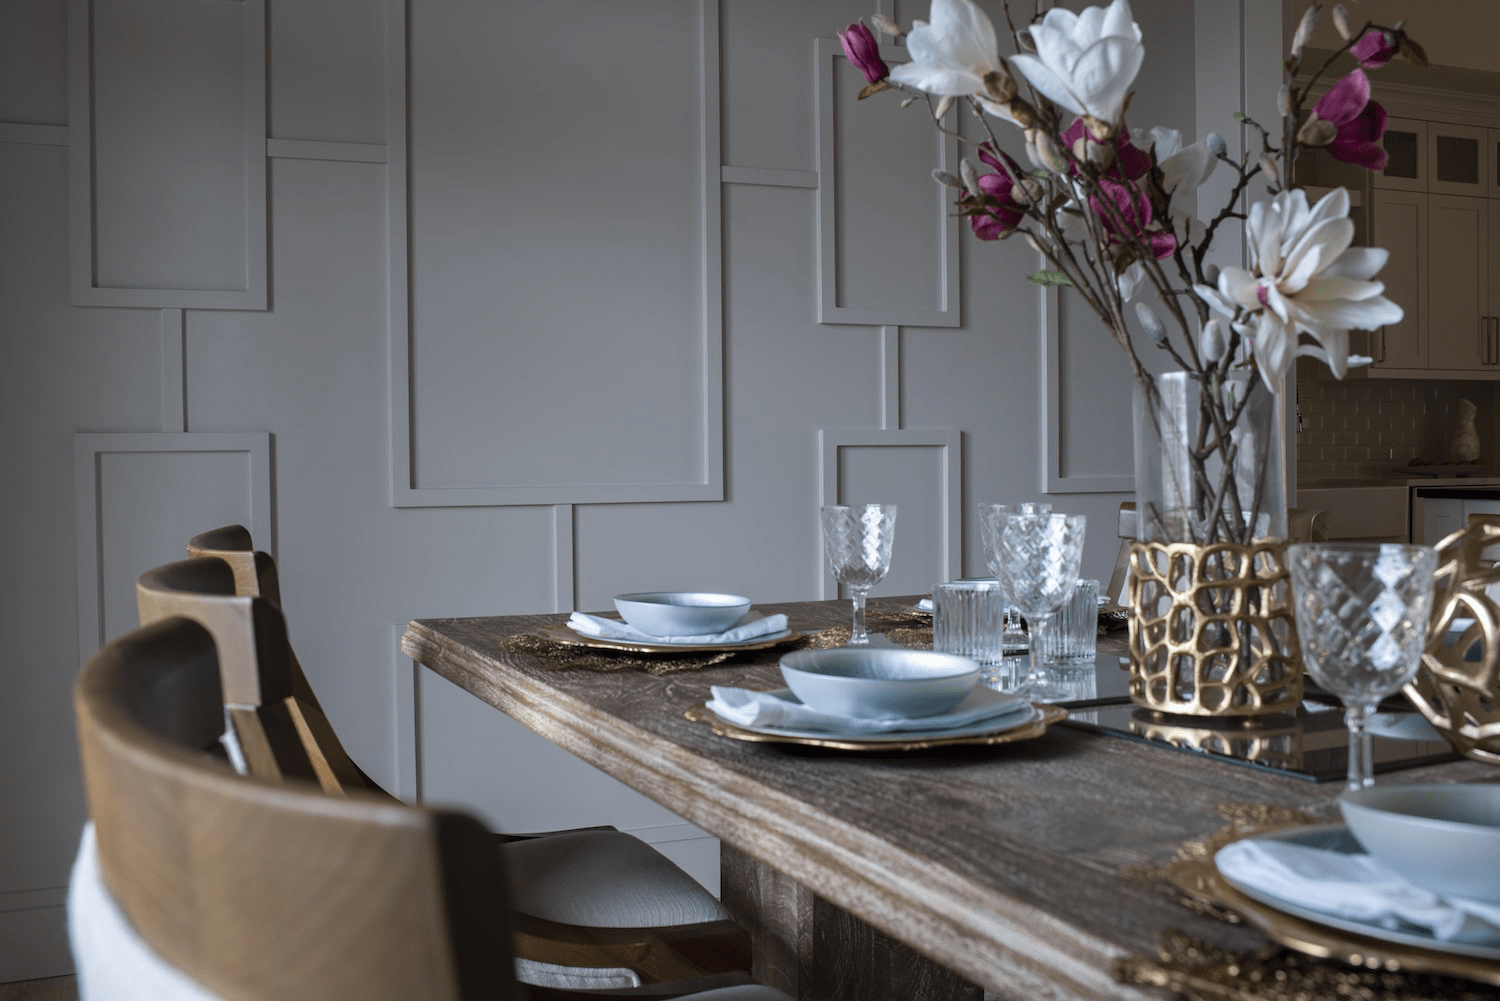 Dining room flooring | Johnston Paint & Decorating